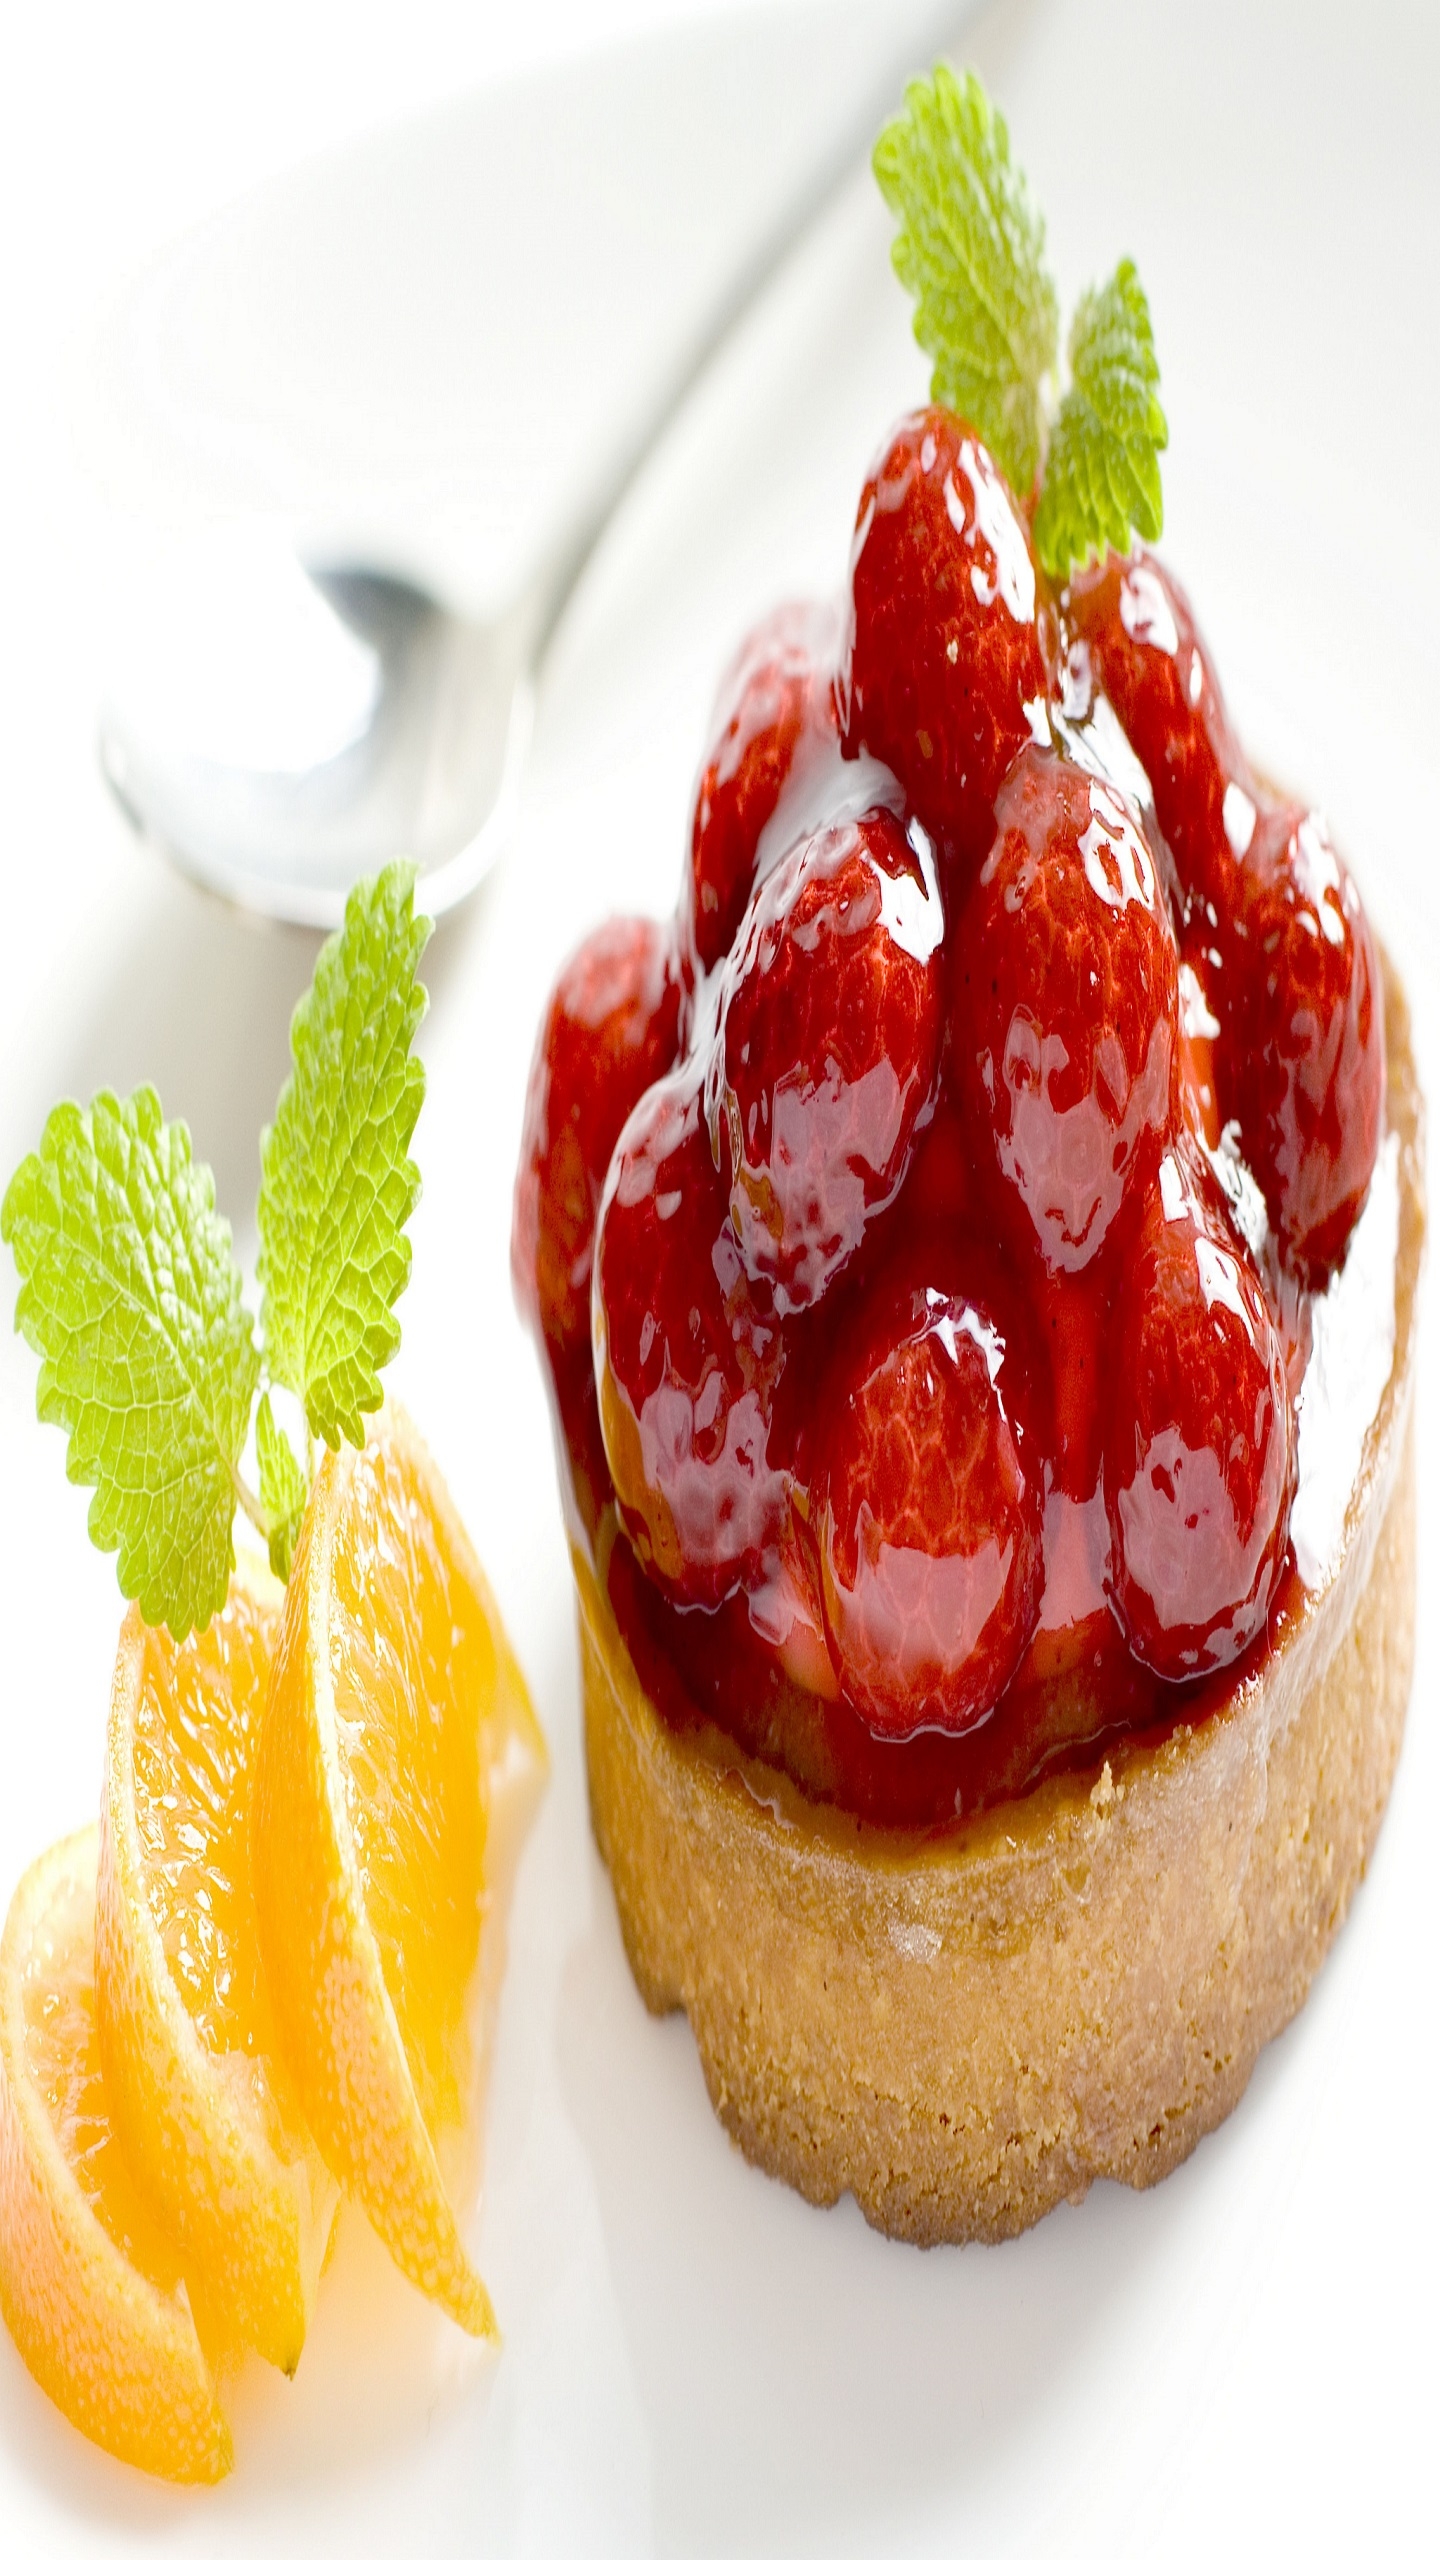 Orange and Cherries for Samsung S7 & S7 Edge resolution